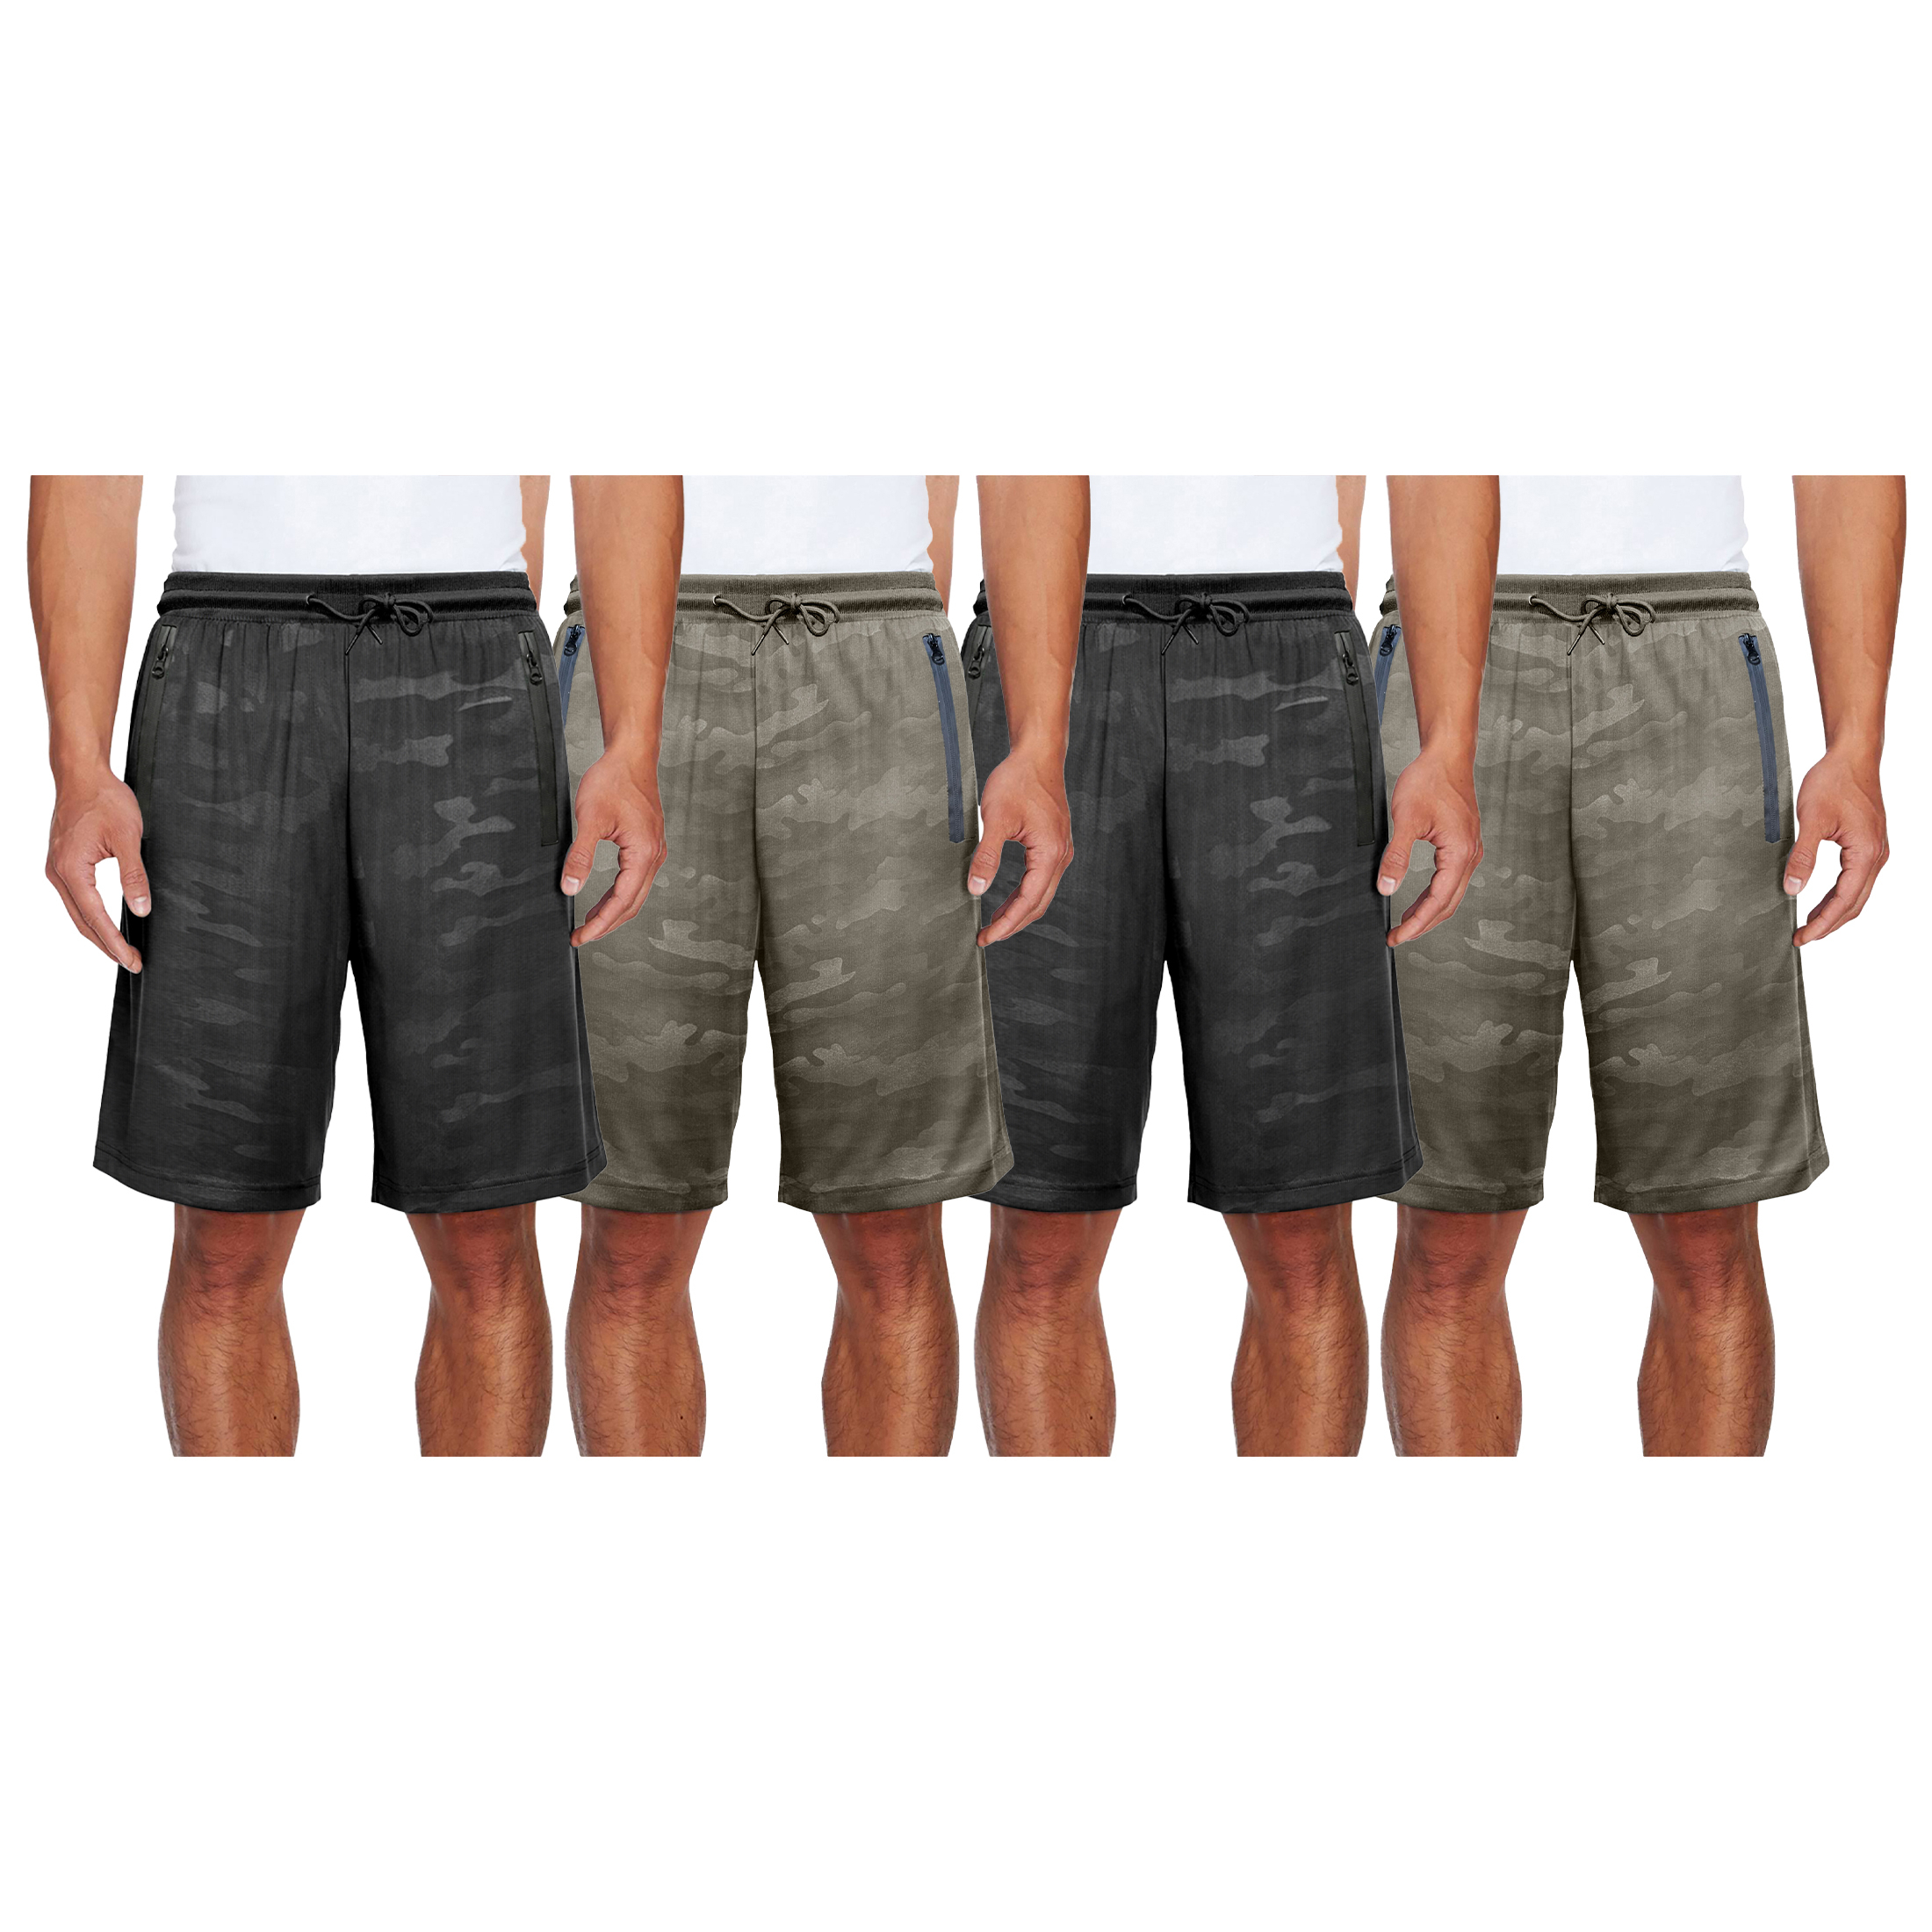 2-Pack: Men's Quick Dry Camo-Print Athletic Performance Active Running Scuba Shorts - Olive, Medium